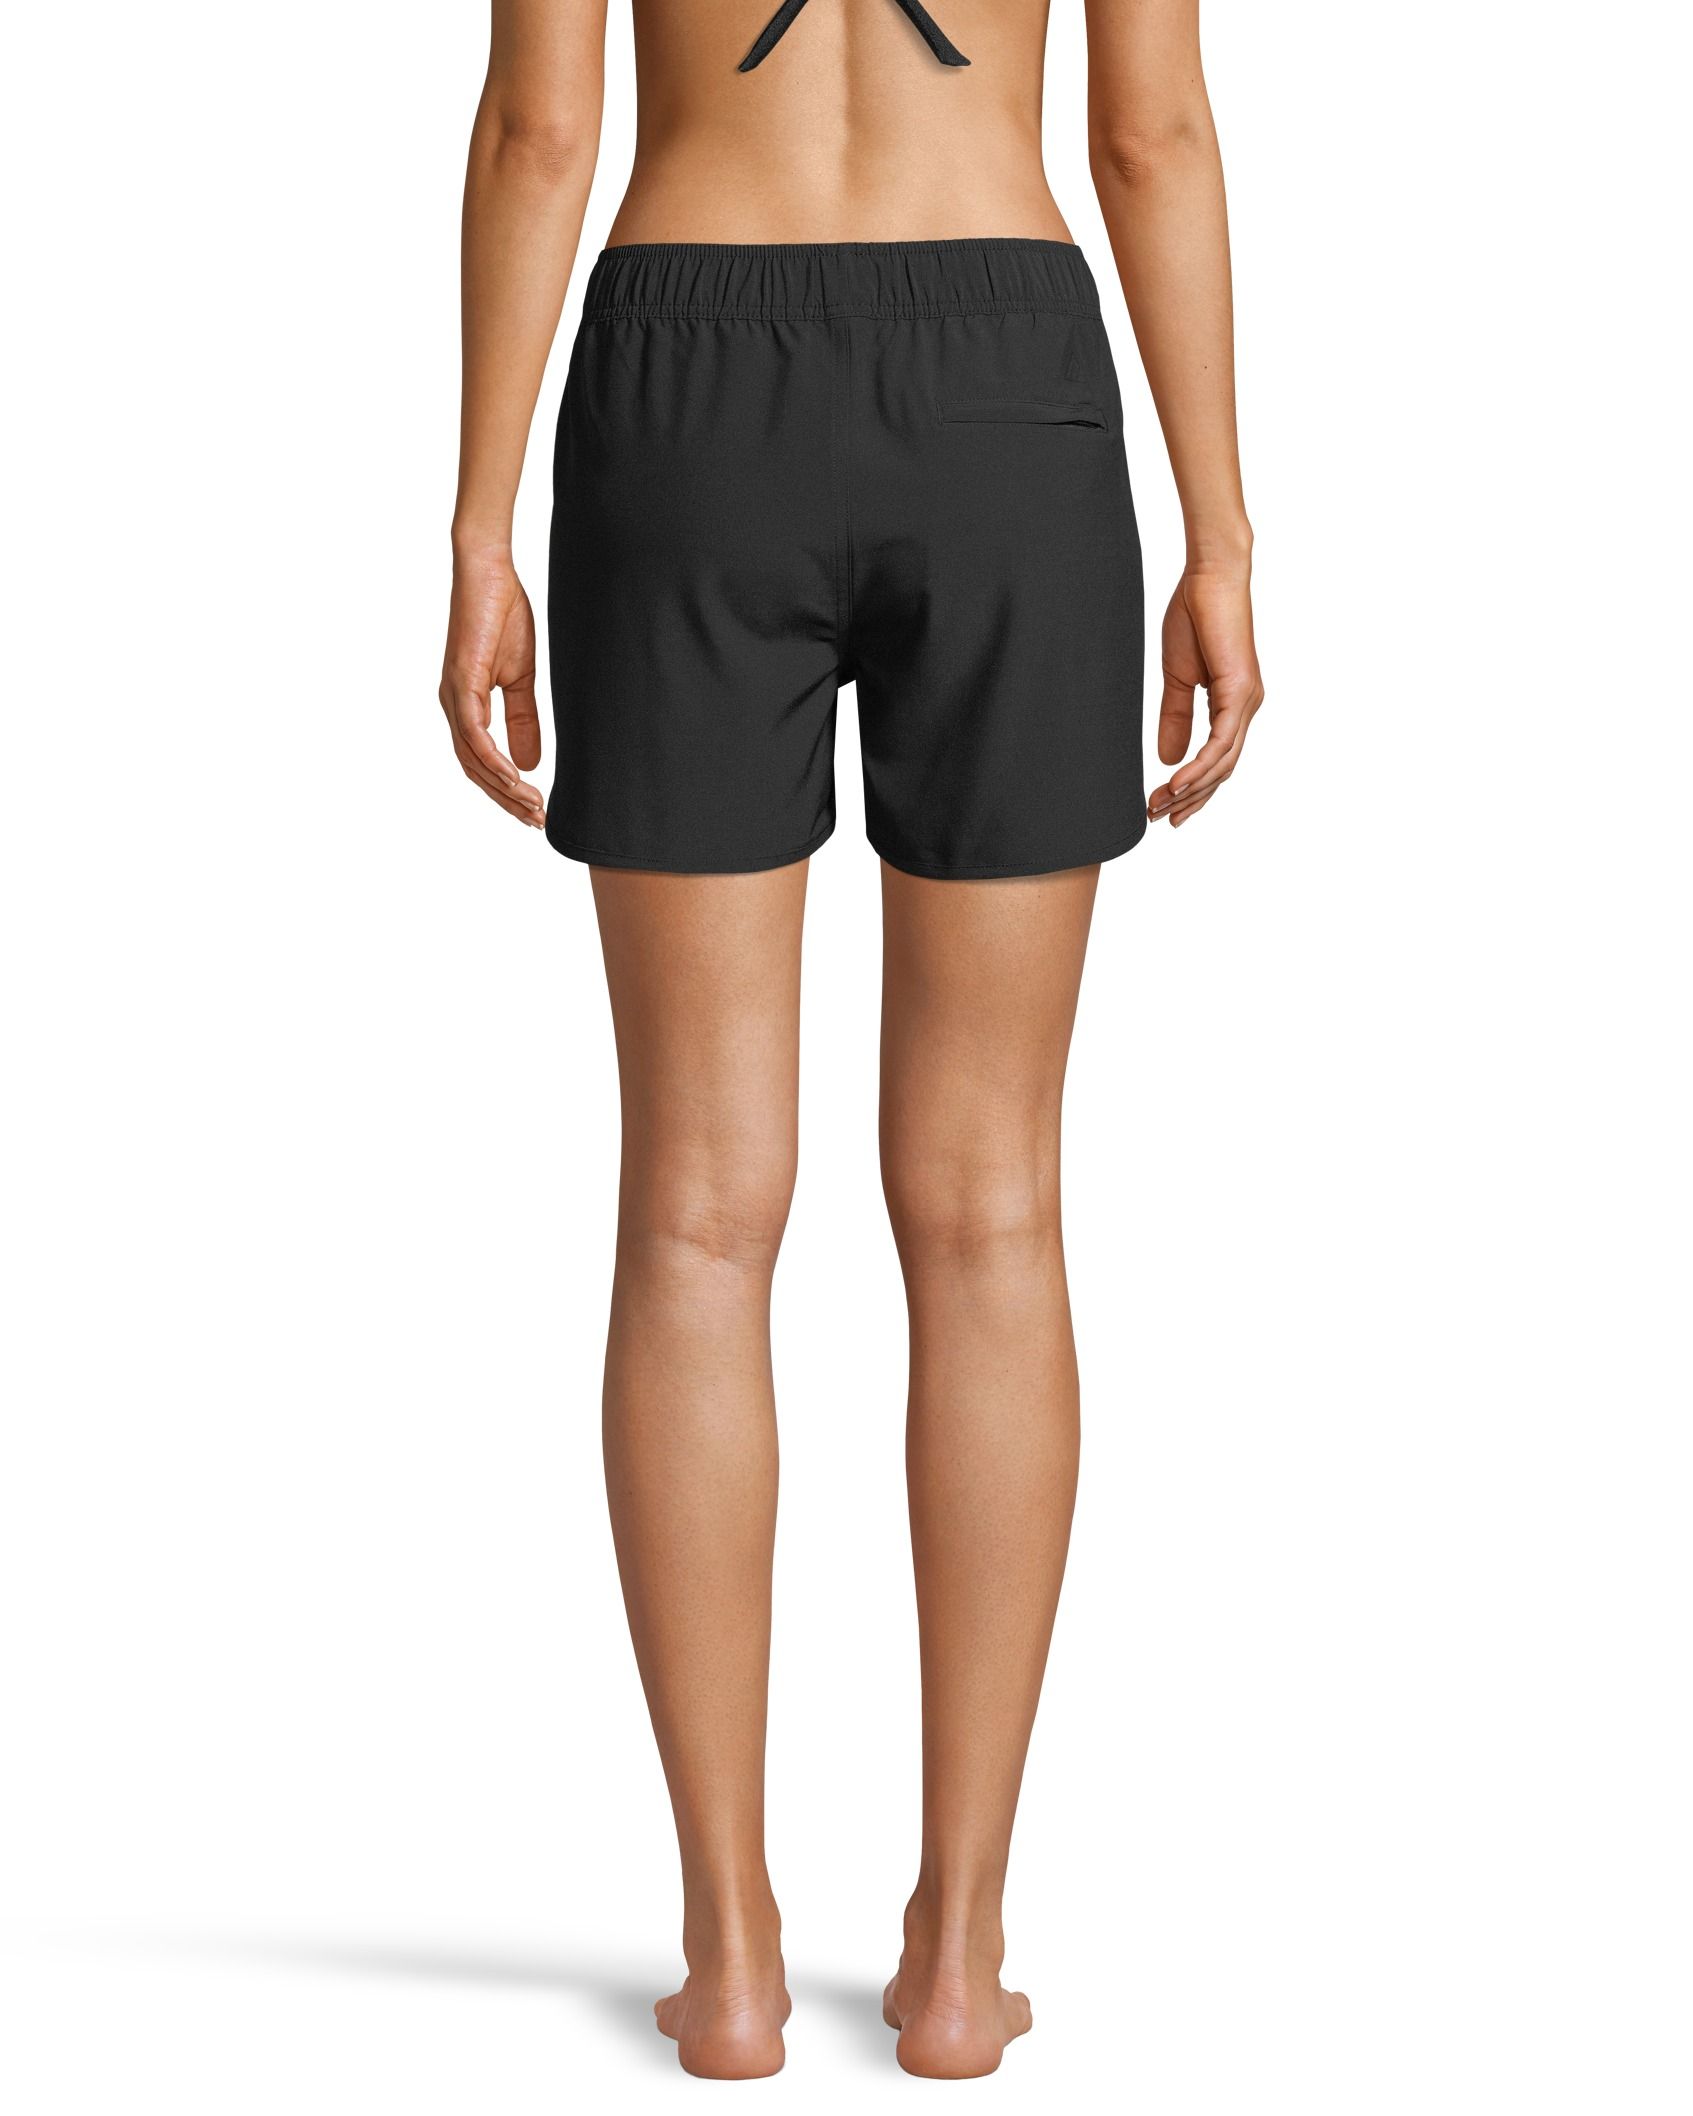 WhrDarll Womens Board Shorts Tummy Control Swimsuit Bottoms UPF 50+  Swimsuit Boy Shorts Bikini Board Shorts Athletic Shorts : :  Clothing